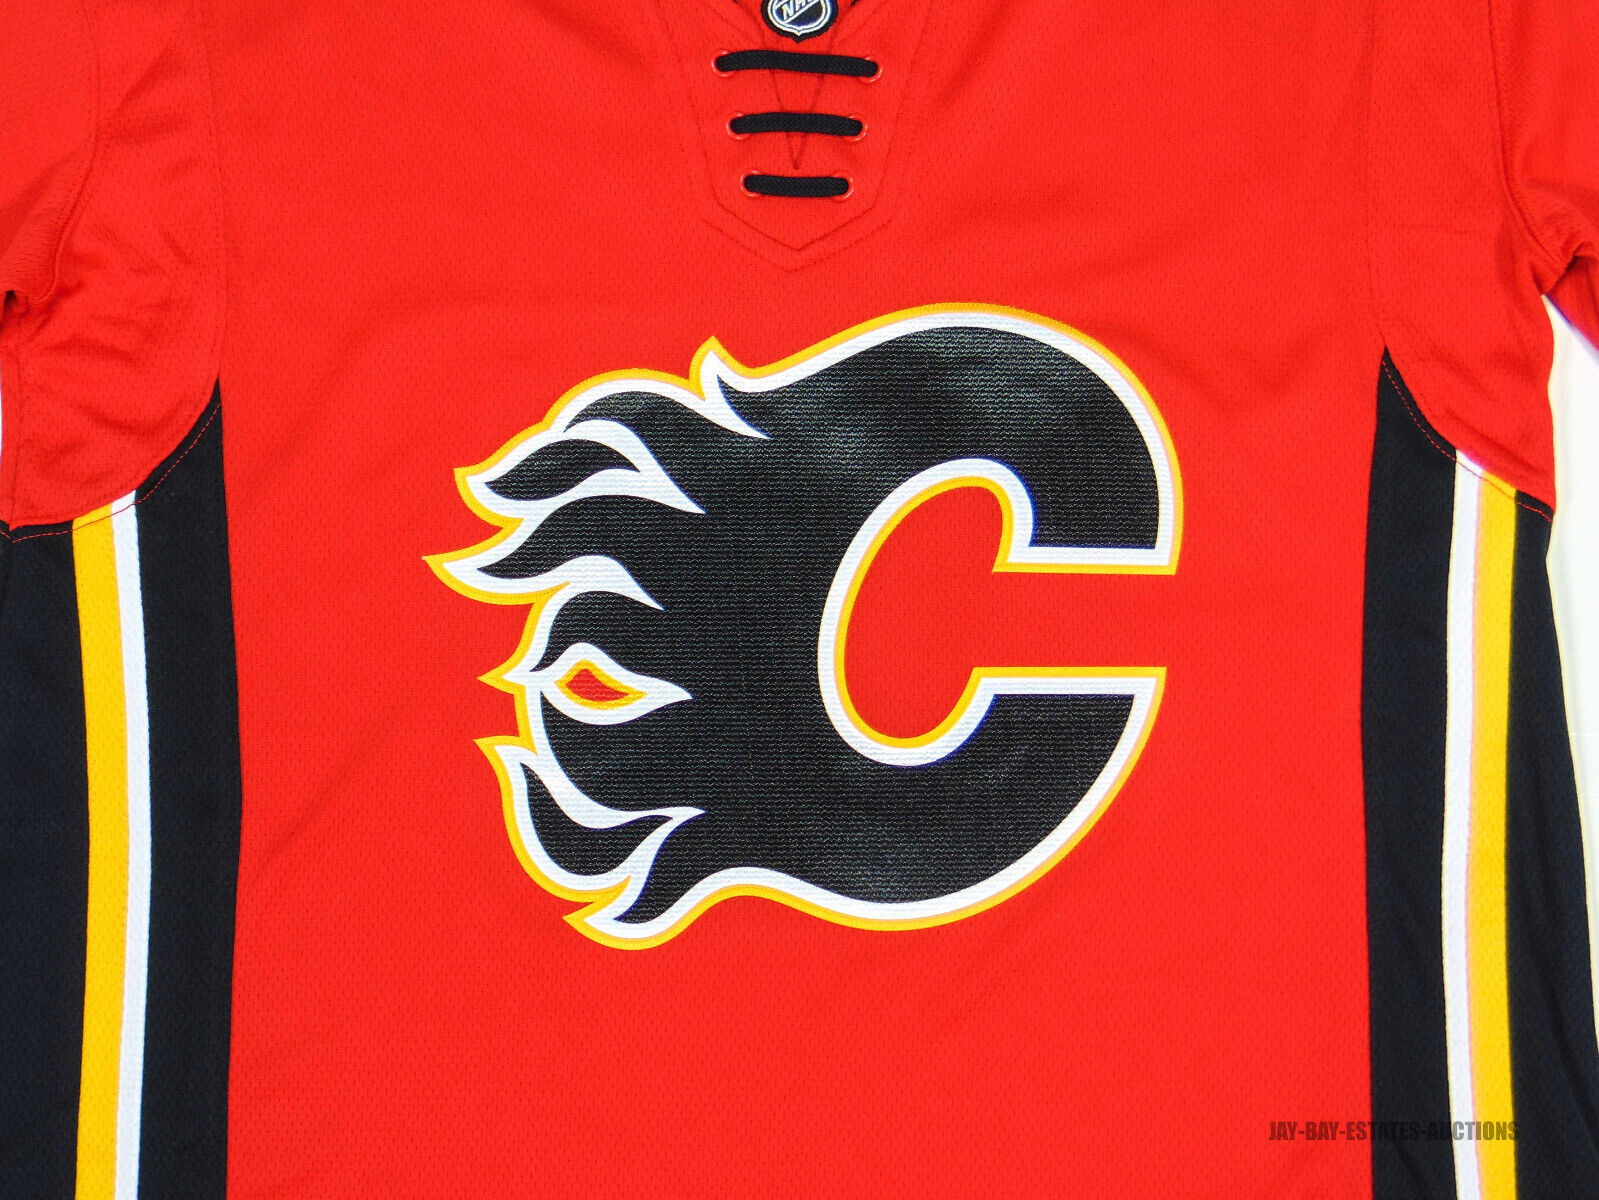 Women's Fanatics Branded Red/Black Calgary Flames Premier Breakaway Alternate Jersey Size: Extra Small